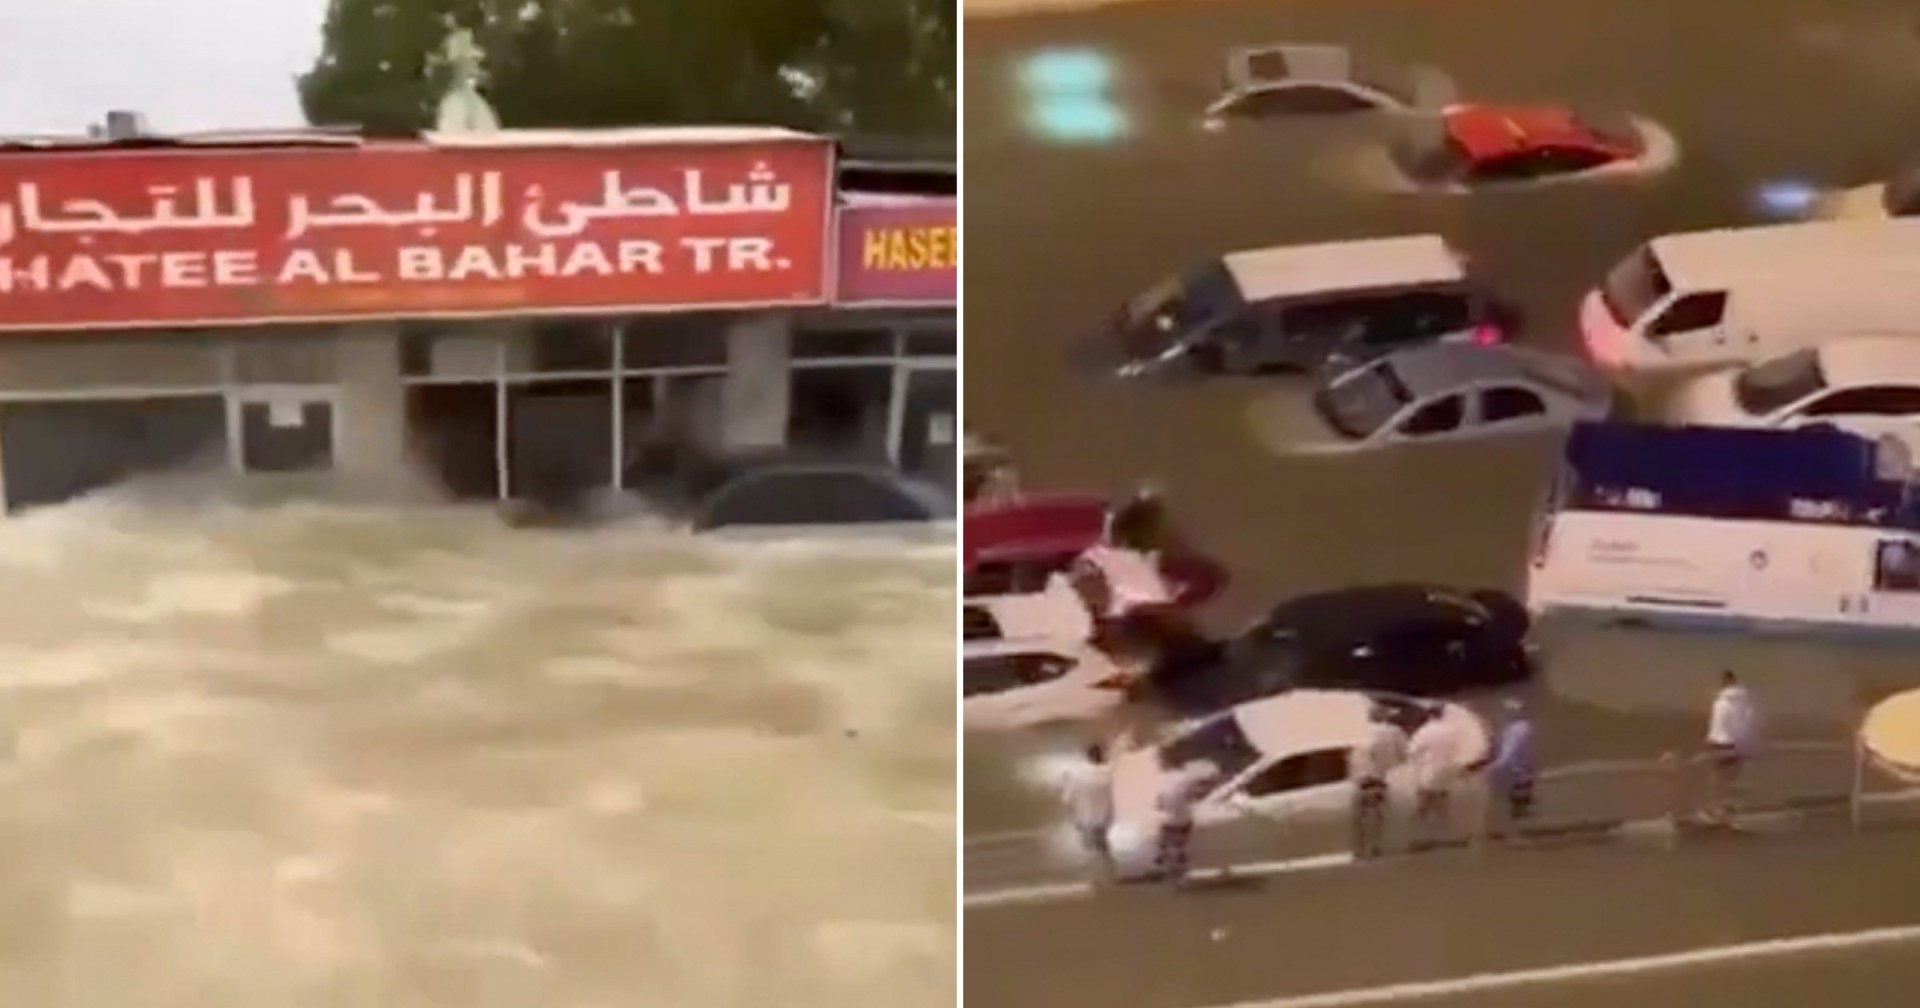 chaos engulfs dubai as people flee flooded desert city